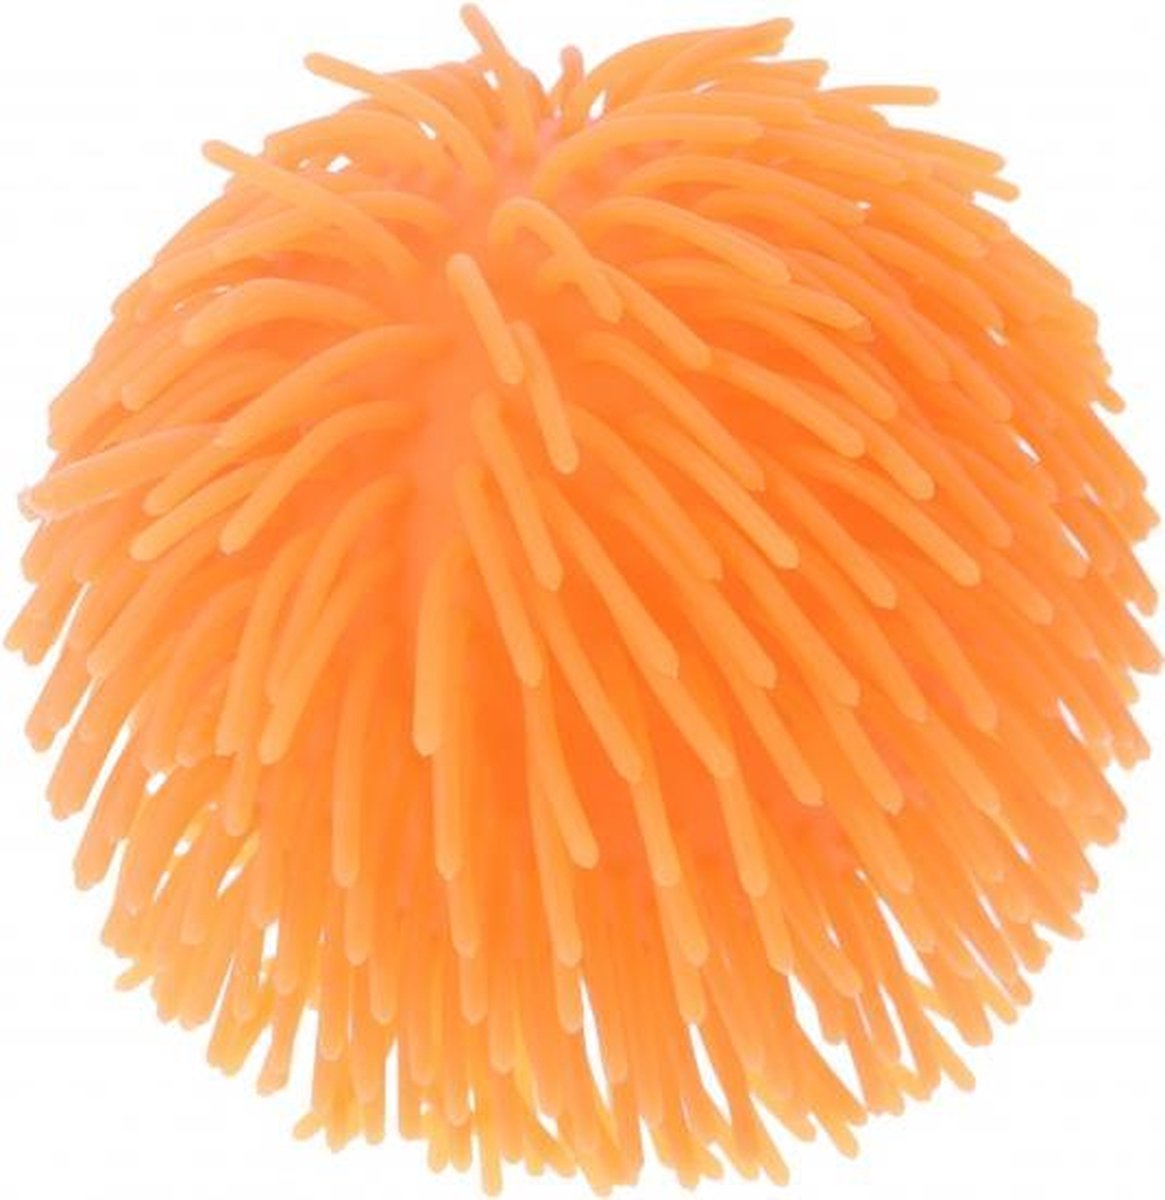 fluffy bal oranje 120 mm